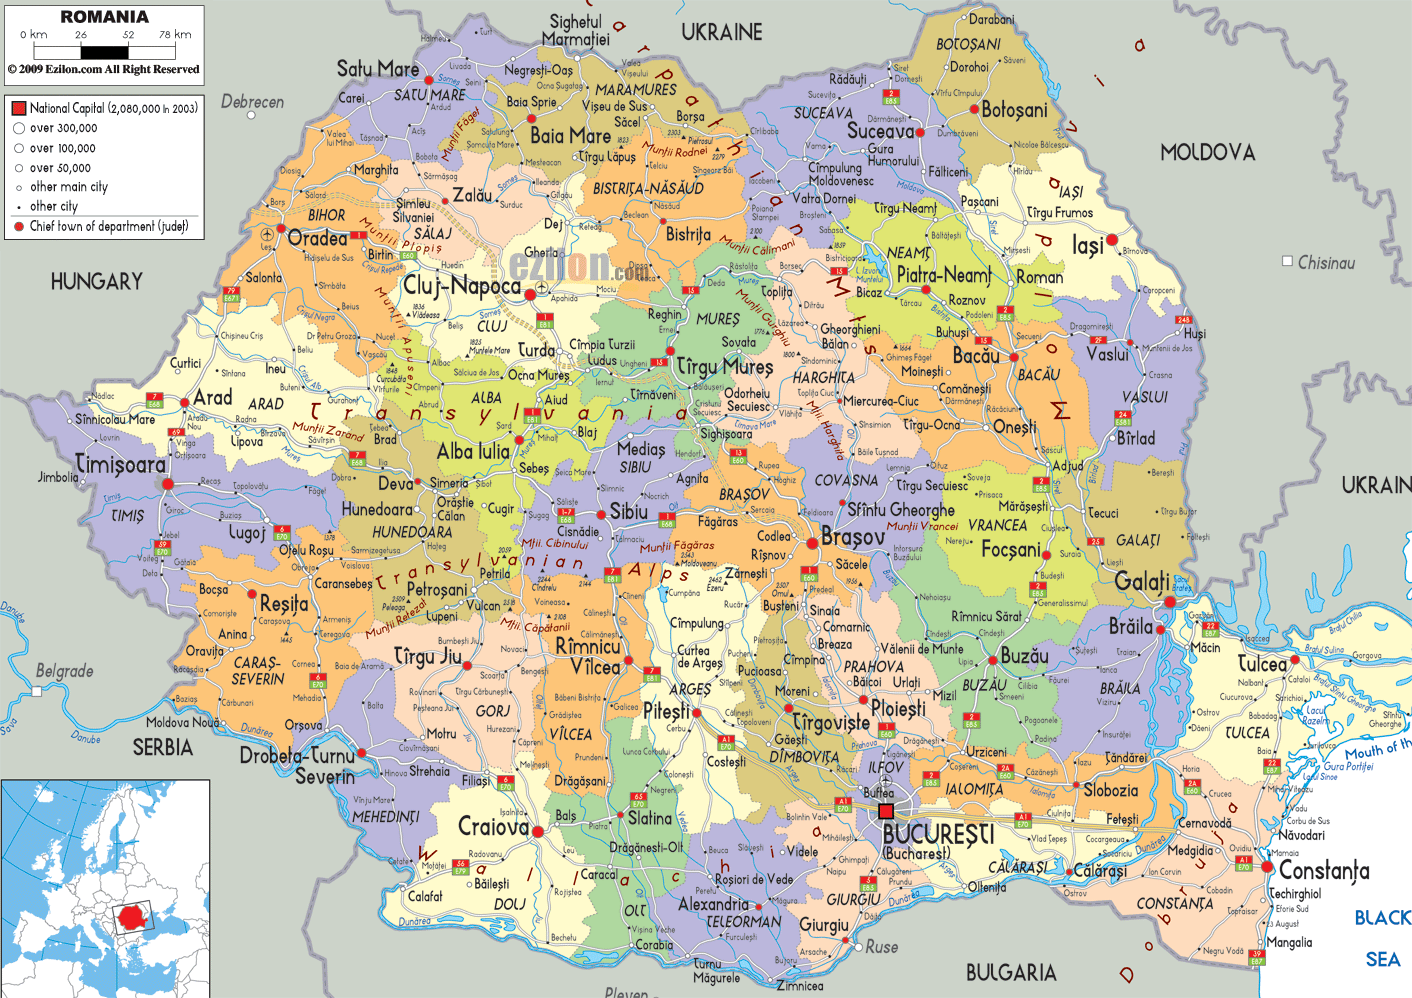 http://www.ezilon.com/maps/images/europe/Romanian-political-map.gif